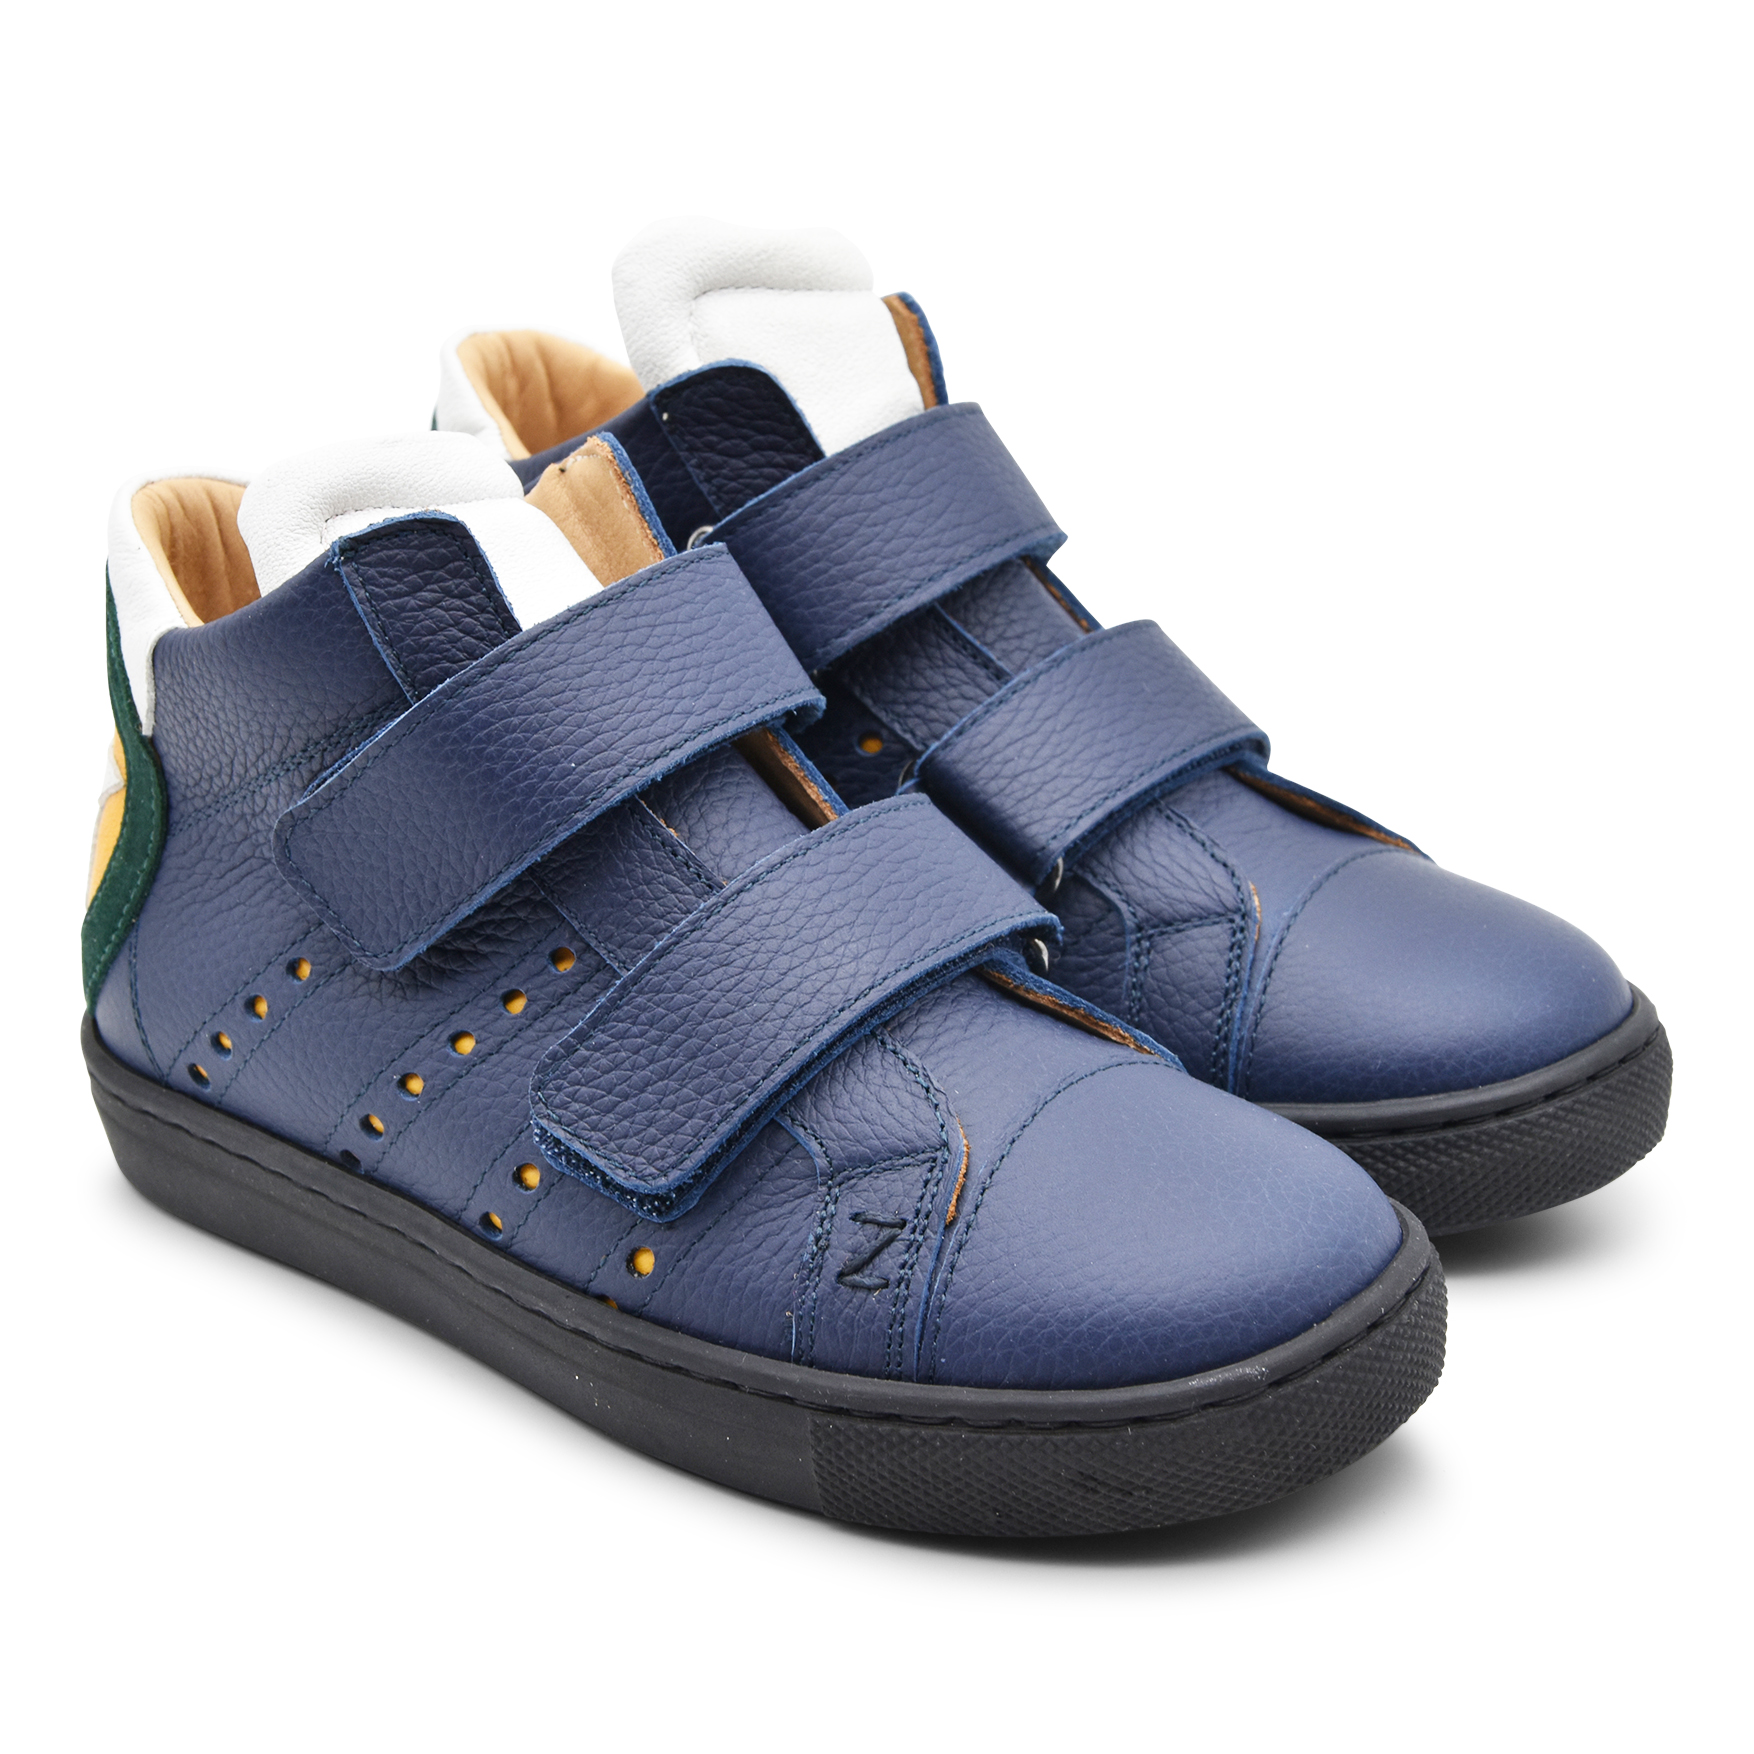 Zecchino D'oro, made in Italy, sneakers alta, pelle, blu, velcro, fronte